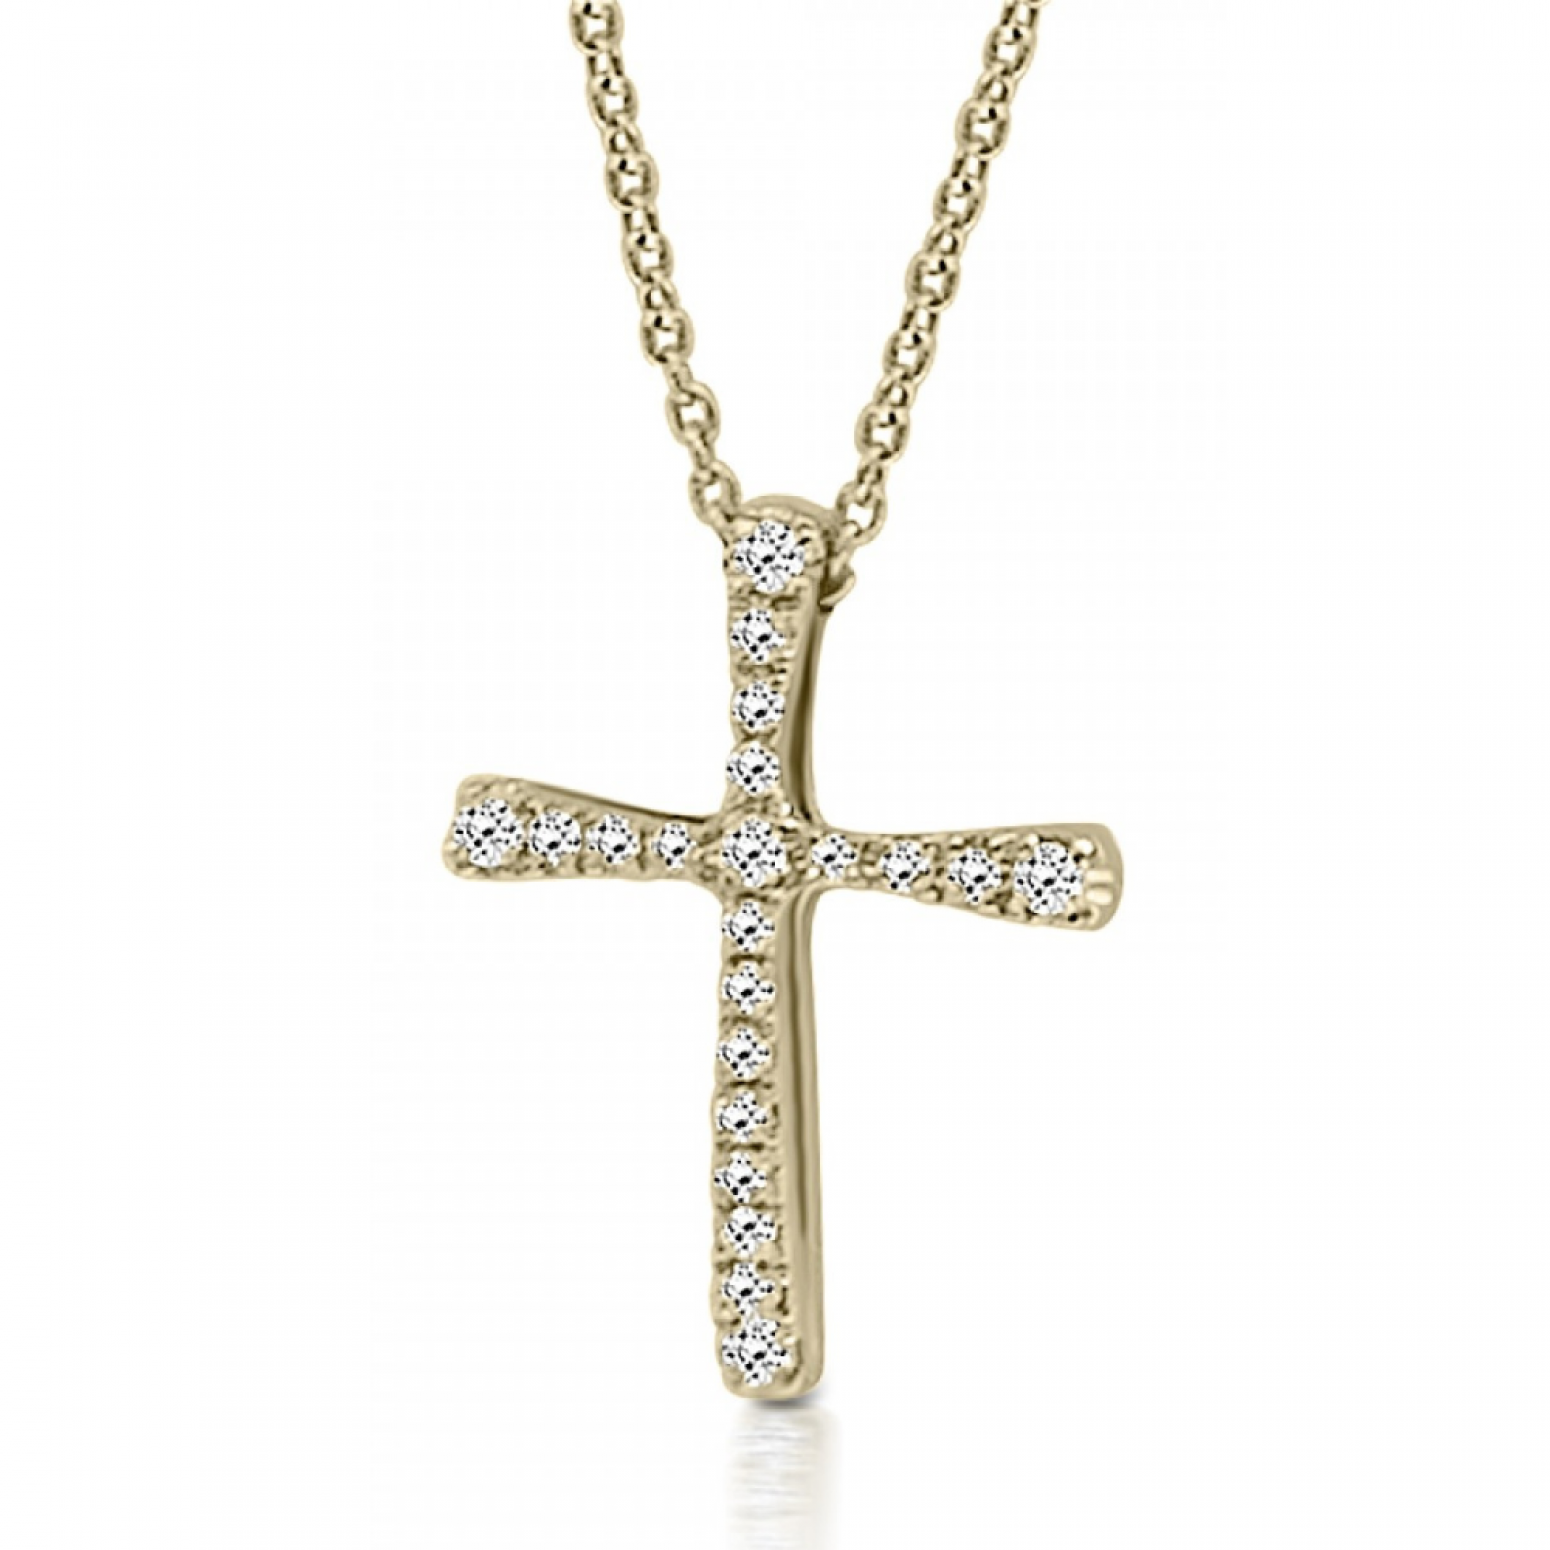 Baptism cross with chain K18 gold with diamonds 0.08ct, VS2, H ko5178 CROSSES Κοσμηματα - chrilia.gr